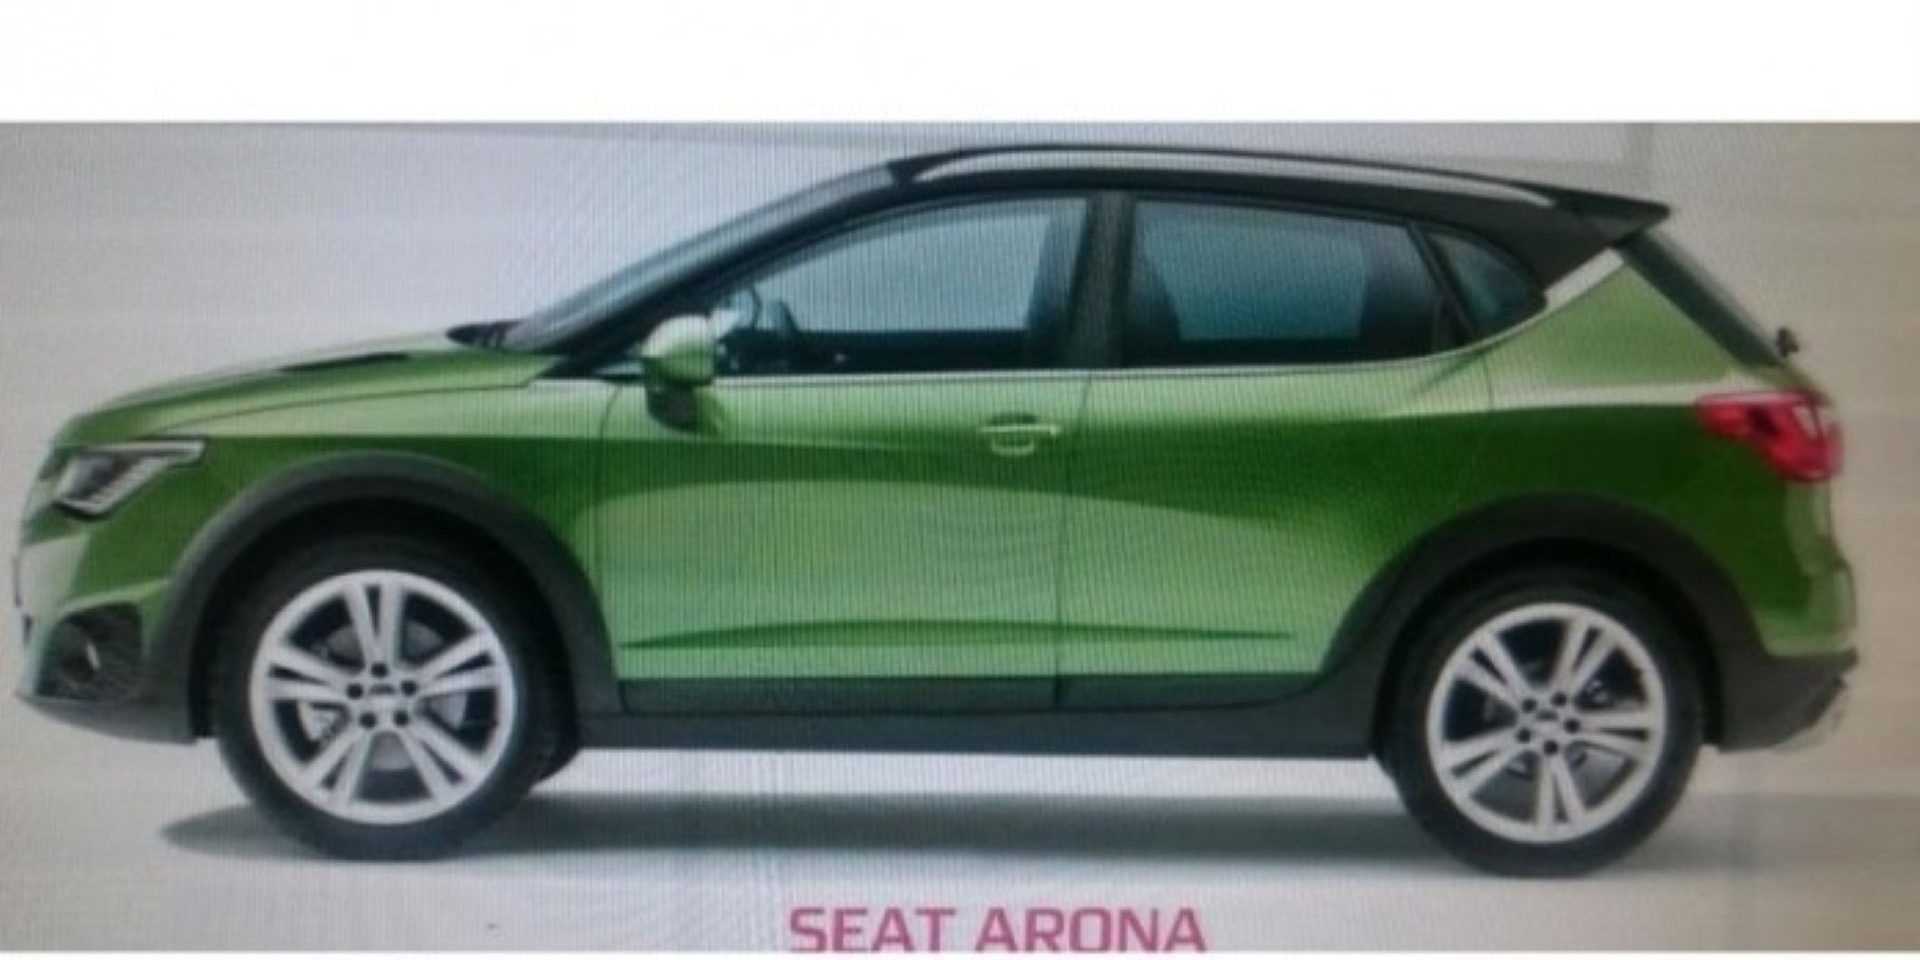 Seat Arona 2017 (gelekt)